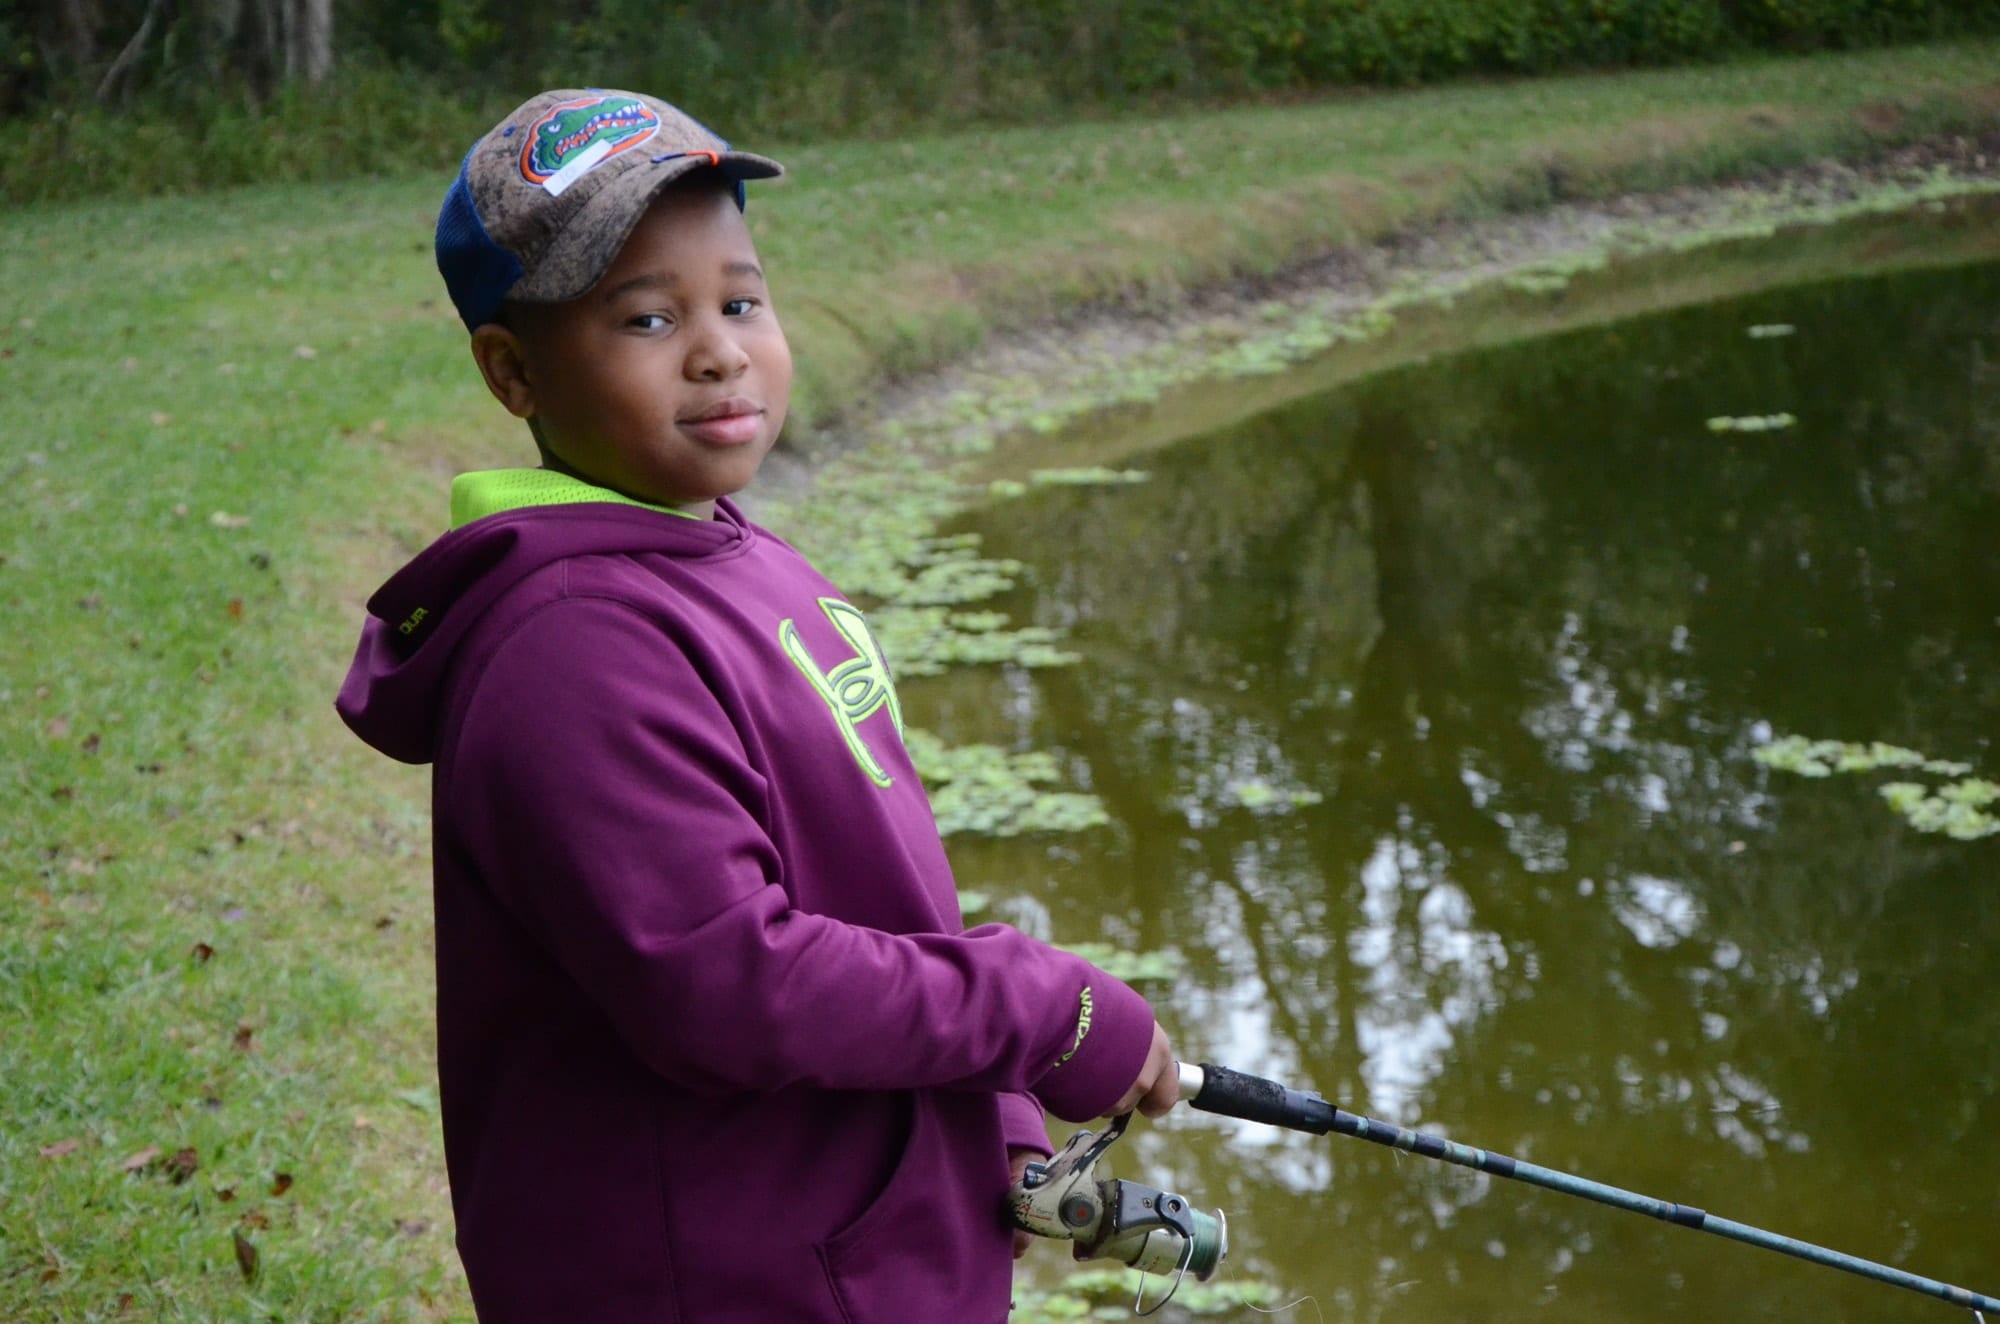 Youth Fishing Derby kicks off December